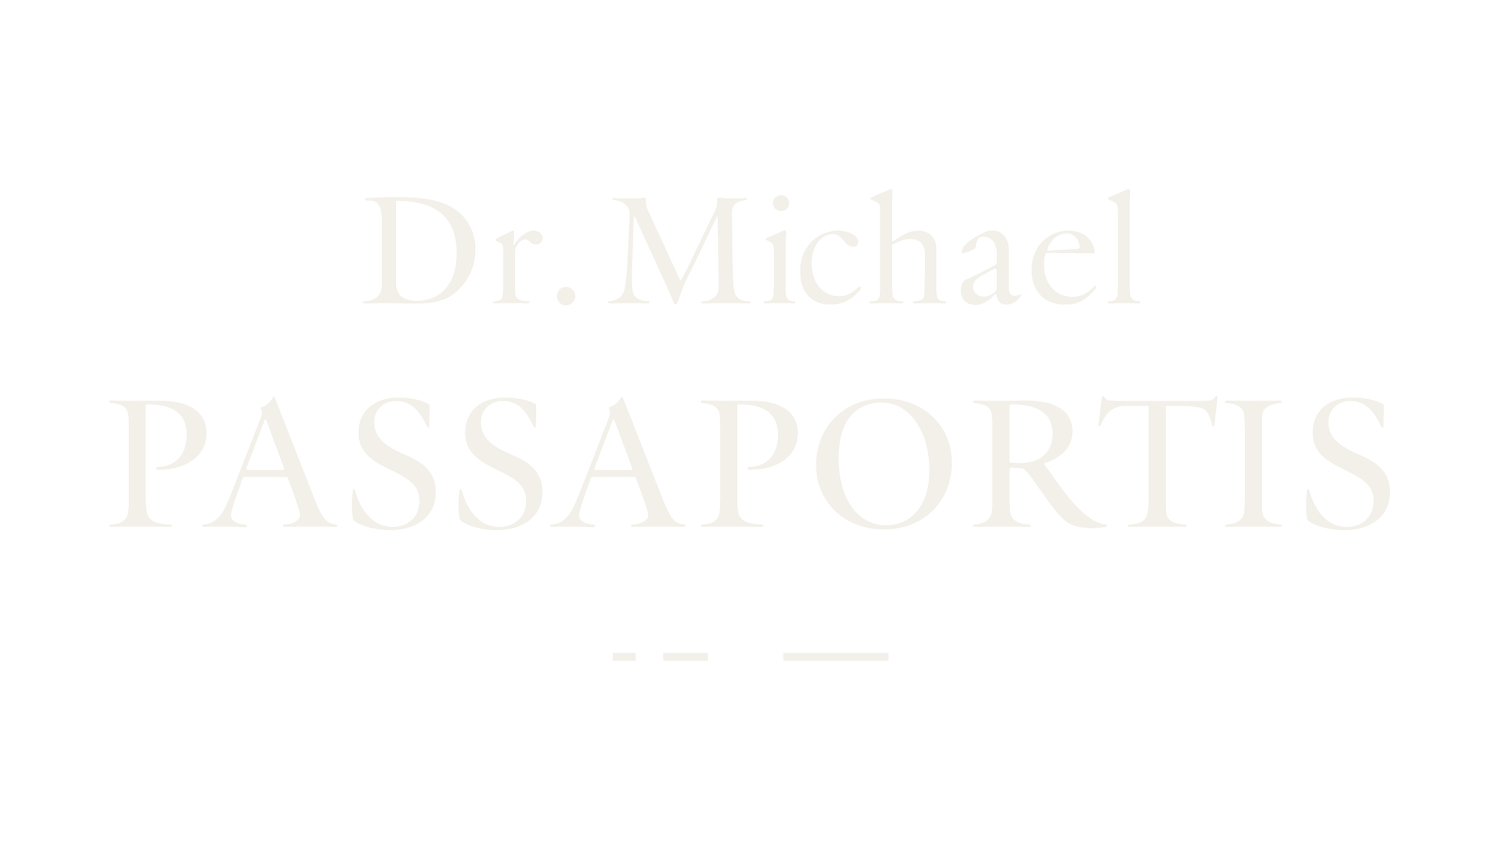 Michael Passaportis